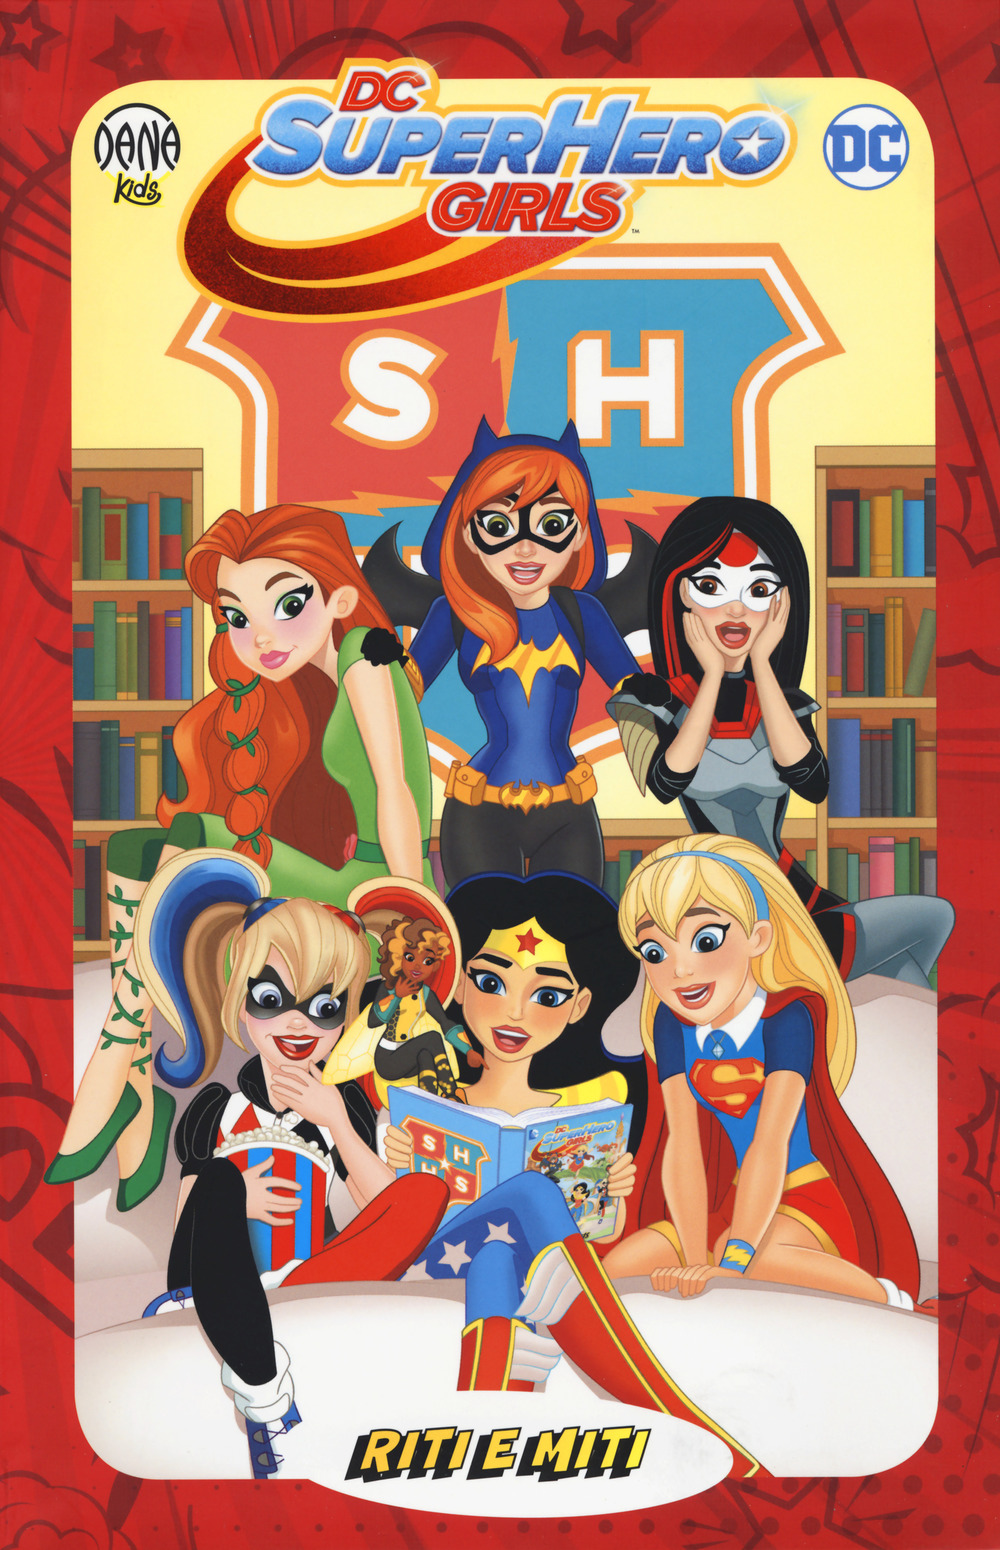 Riti e miti. DC Super Hero Girls